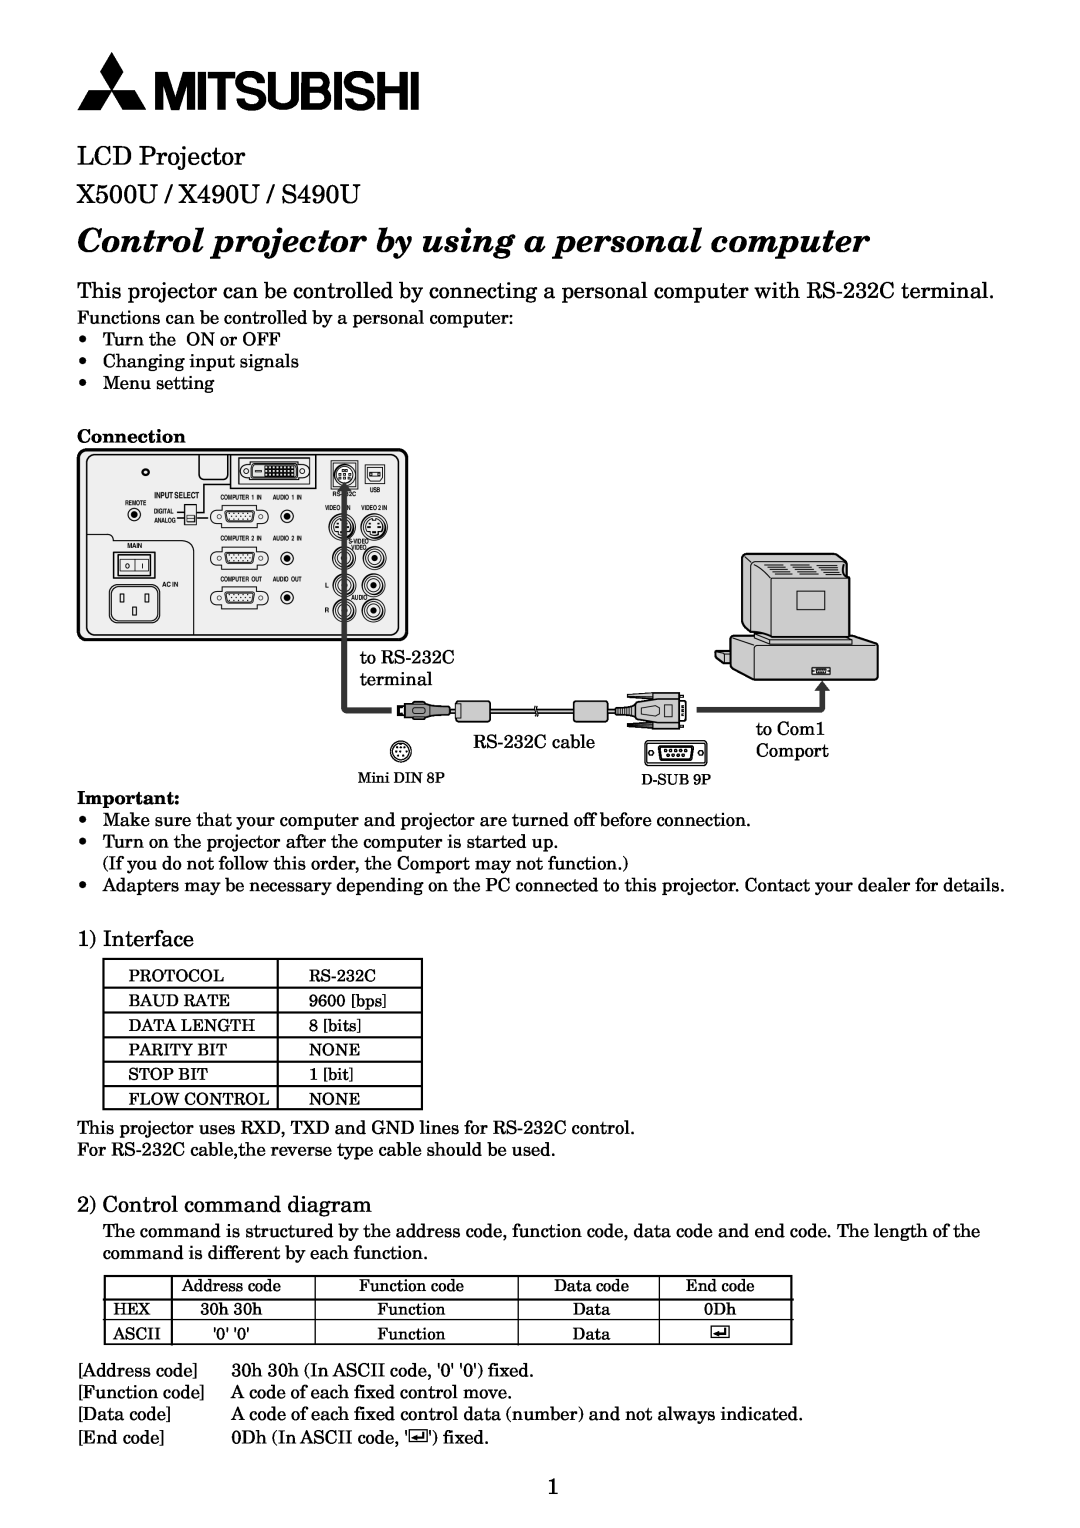 Mitsubishi Electronics manual Interface, Control command diagram, Connection, LCD Projector X500U / X490U / S490U 